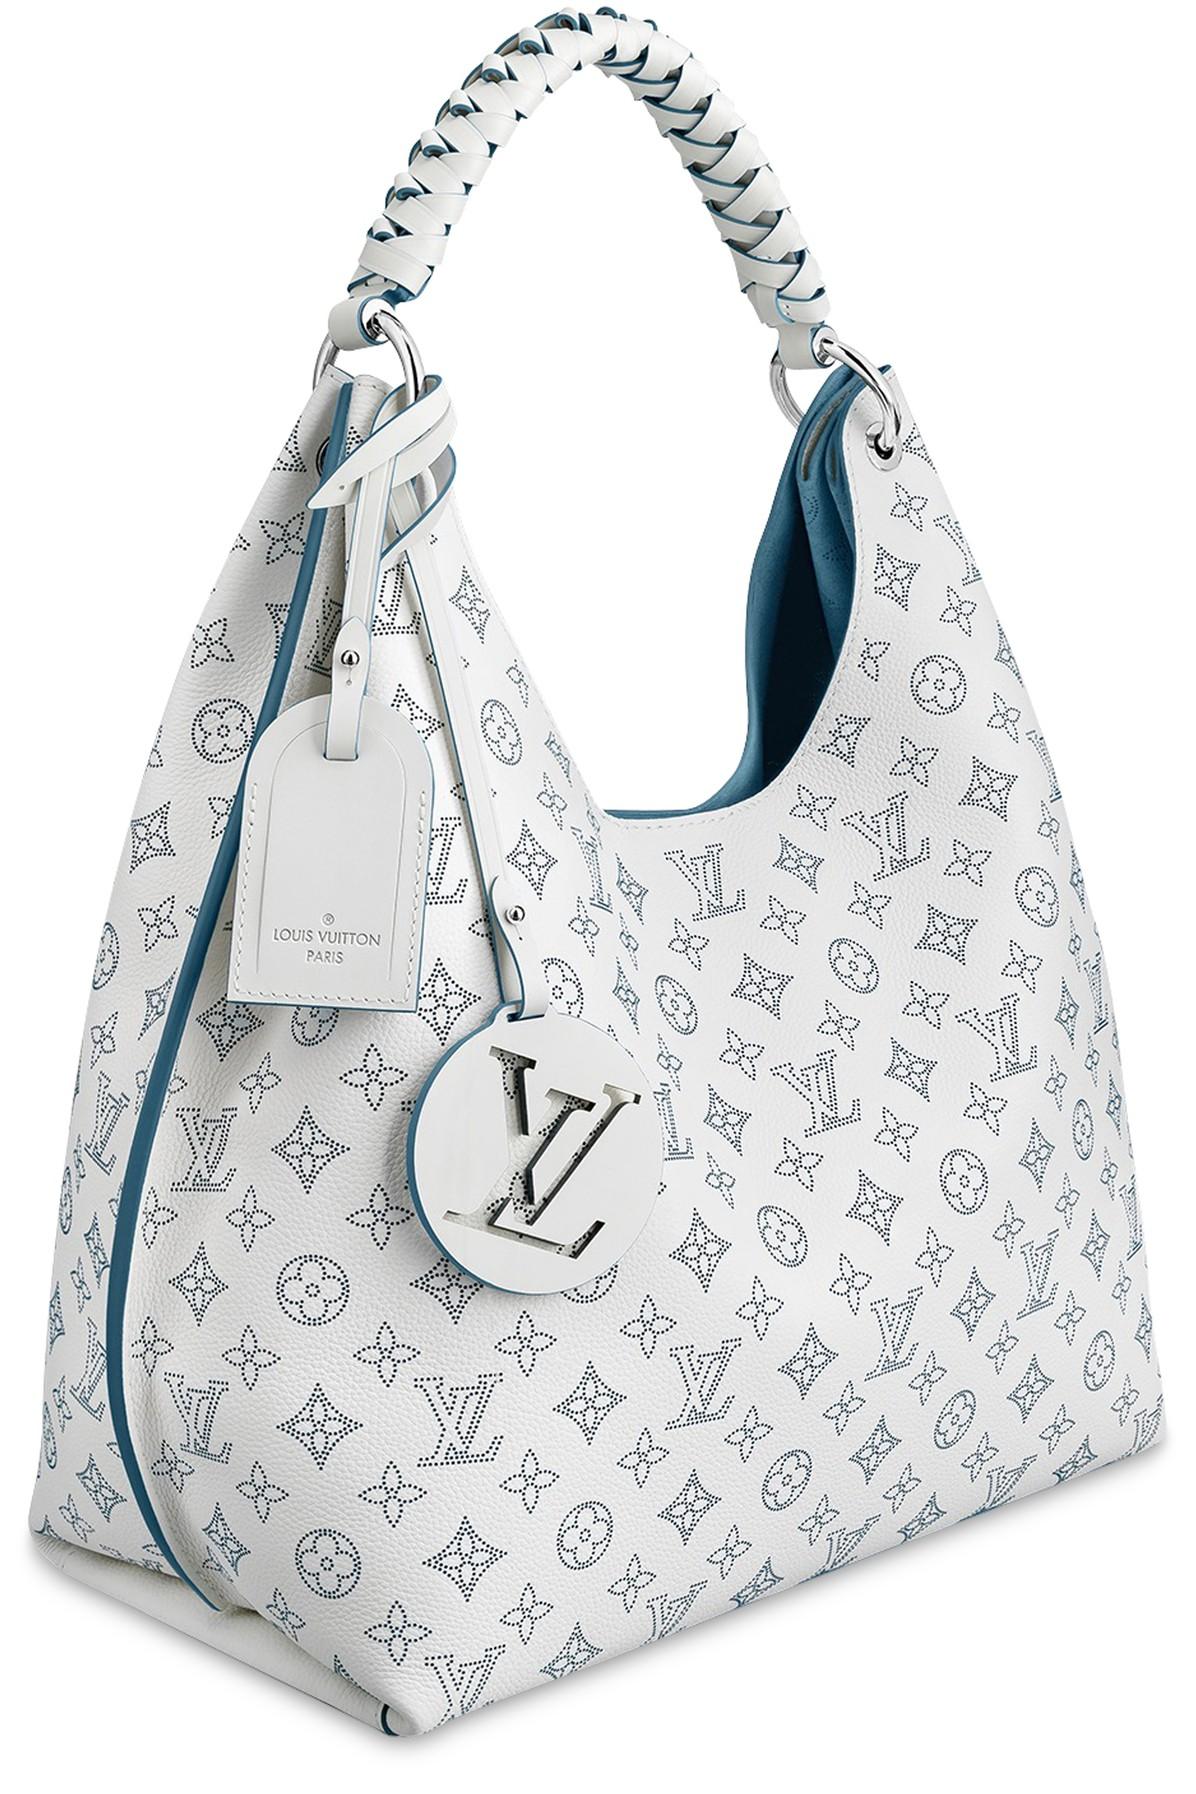 Women's Carmel bag, LOUIS VUITTON